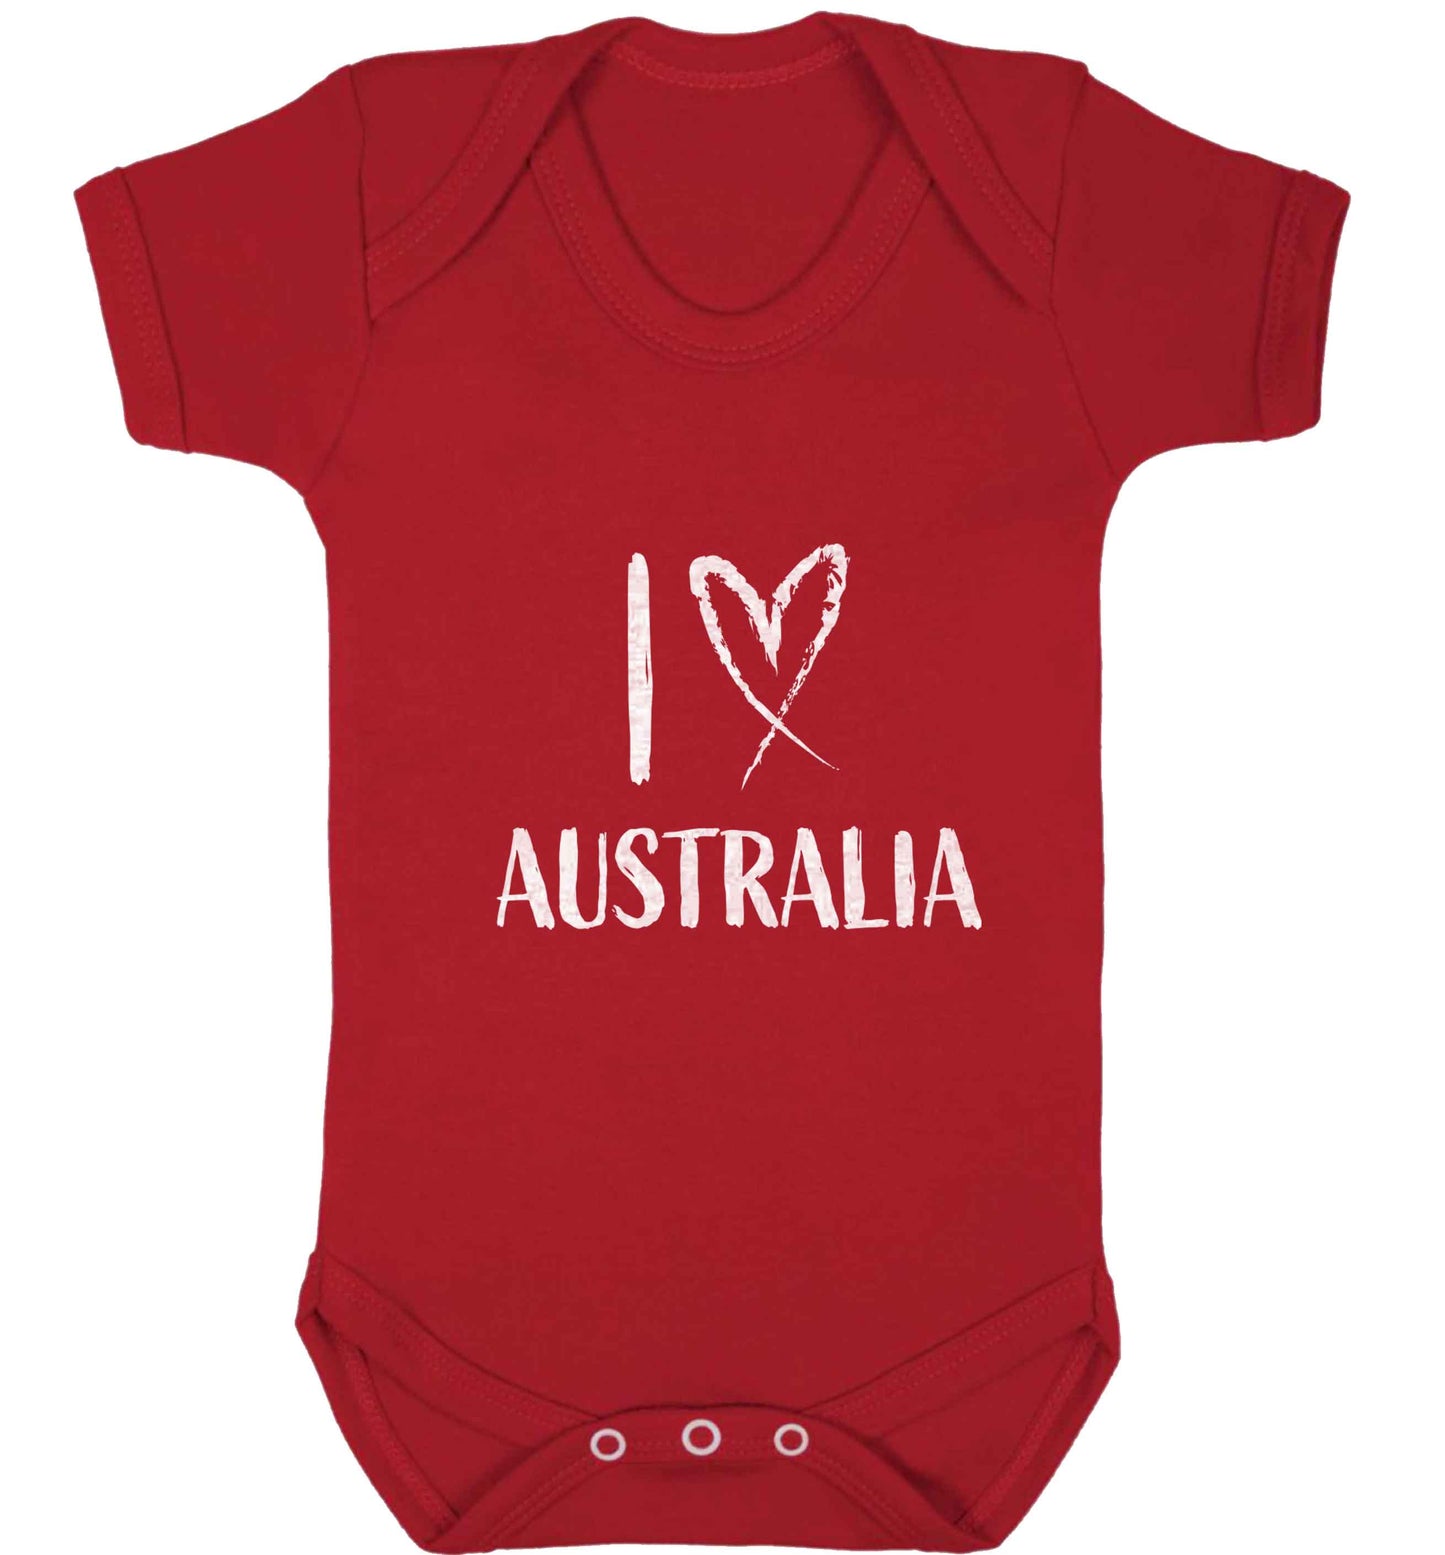 I Love Australia baby vest red 18-24 months